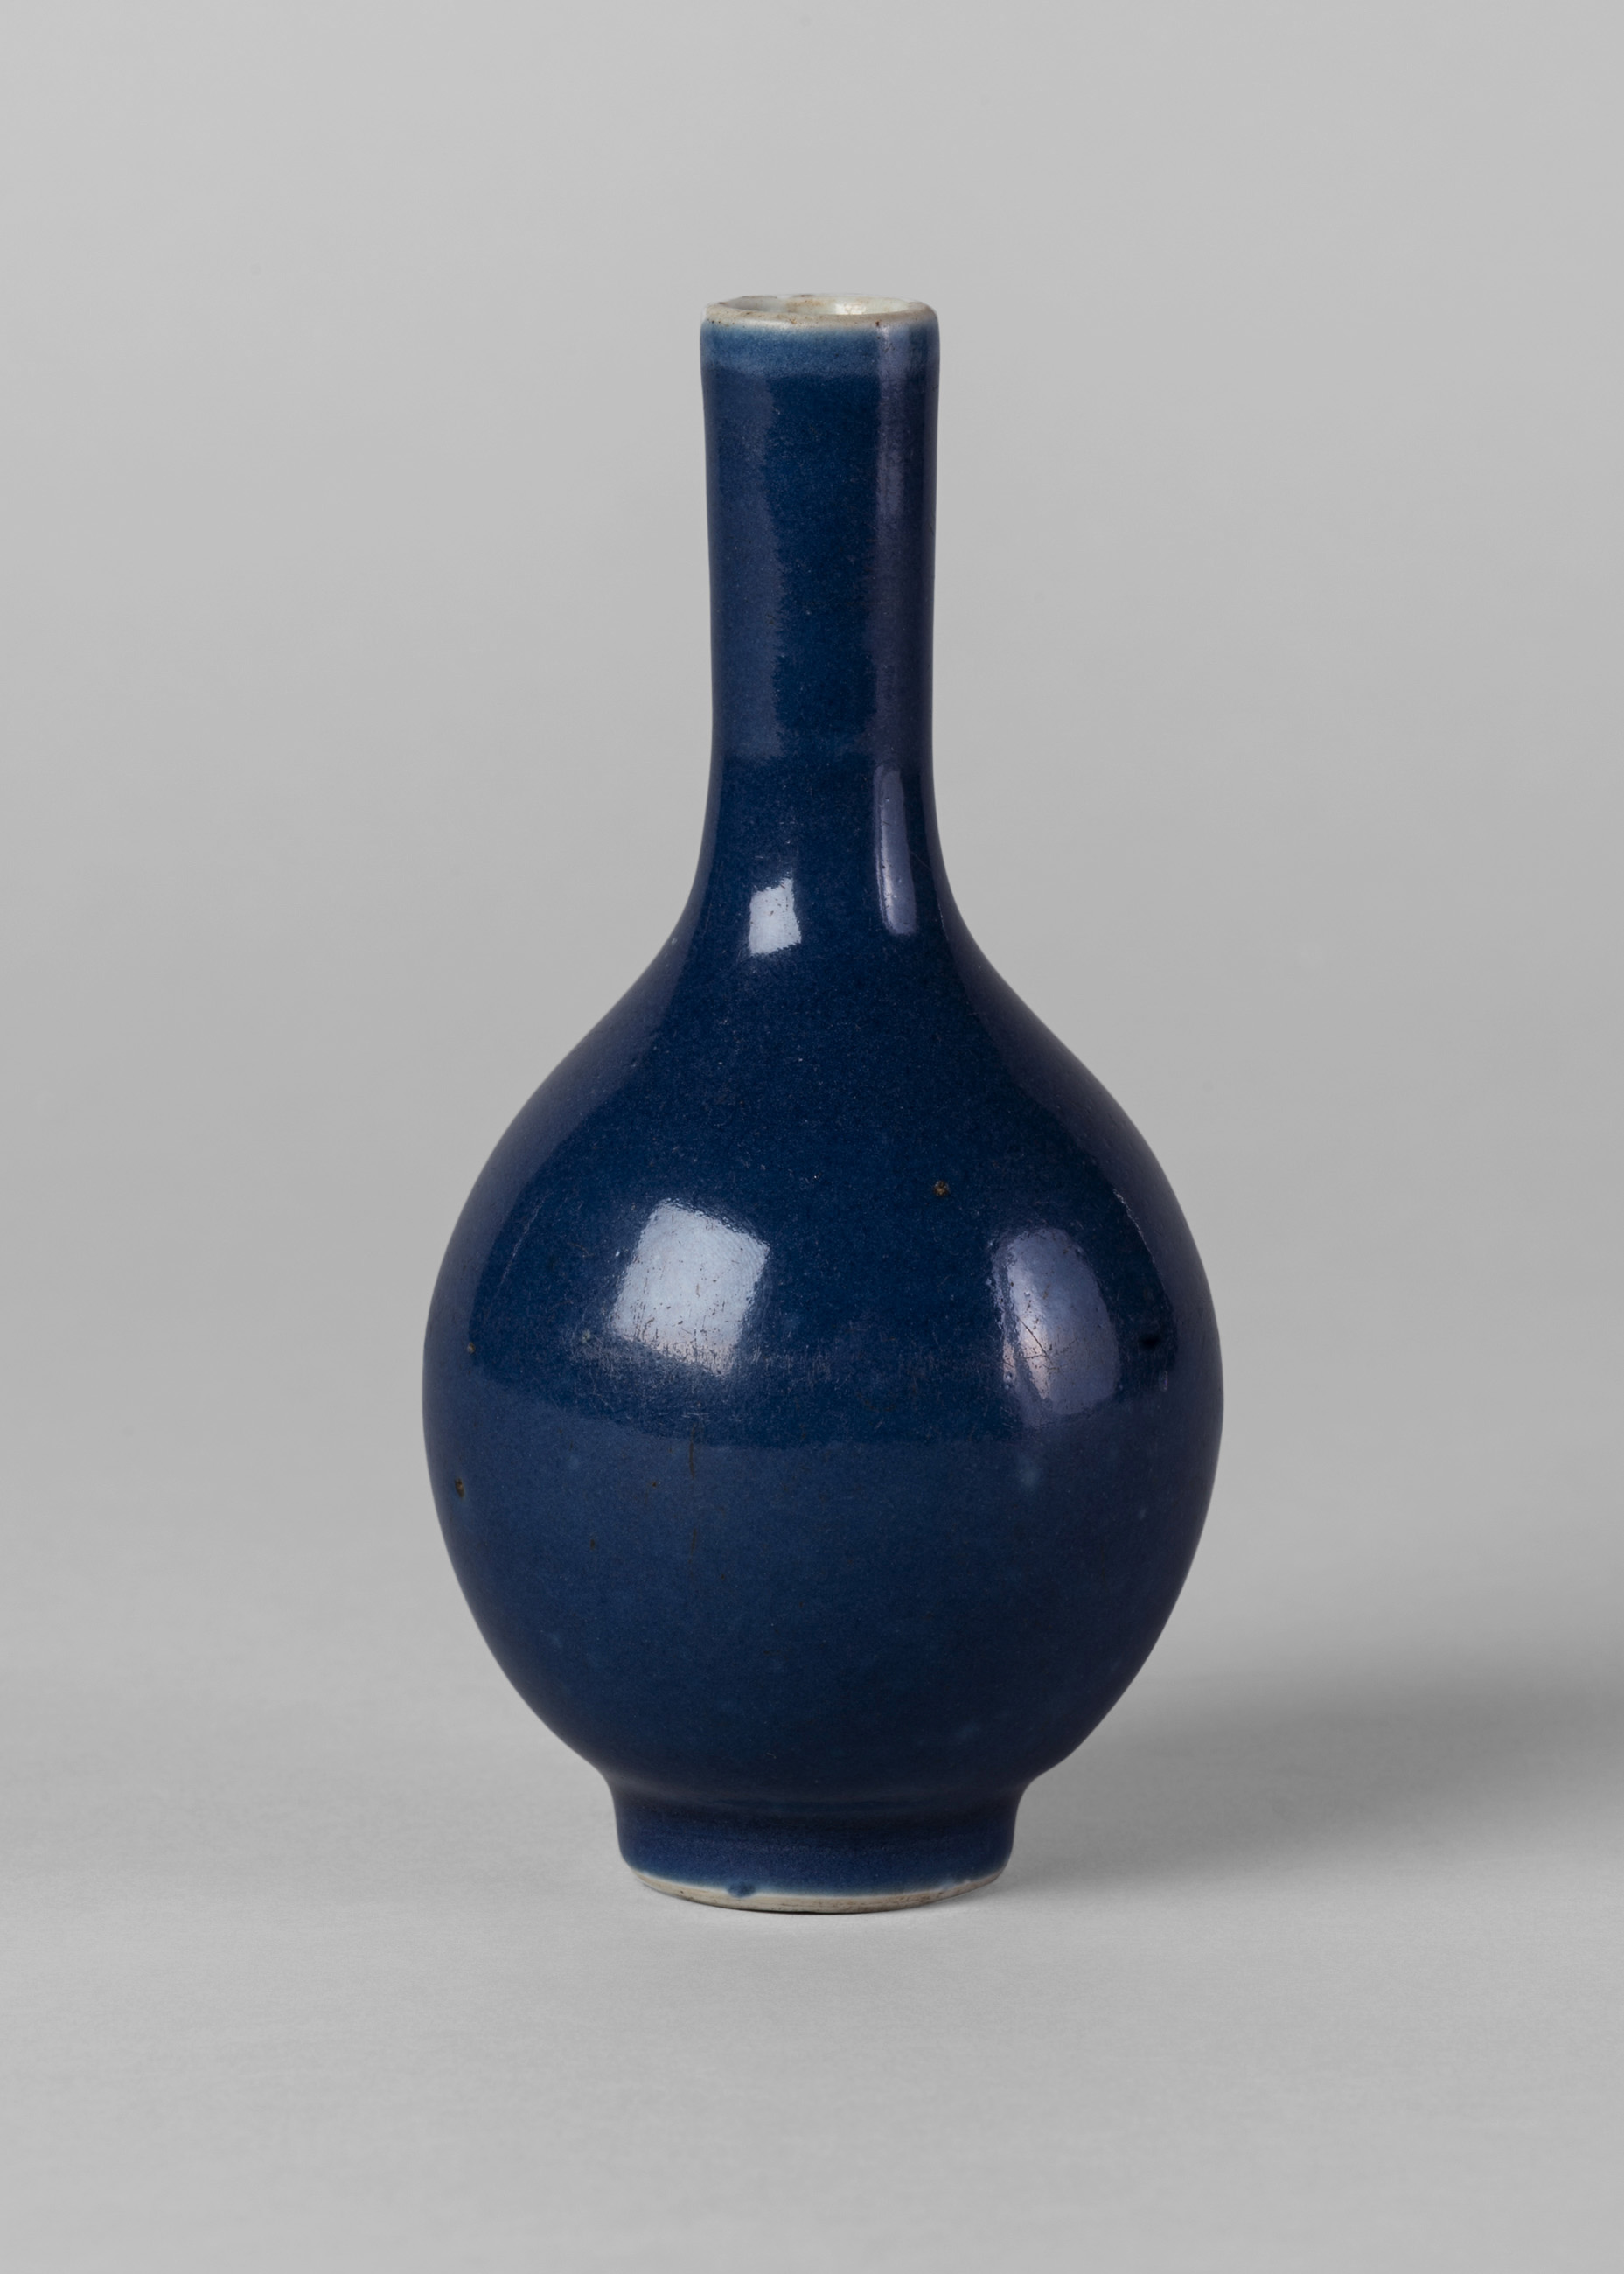 A Chinese porcelain monochrome powder blue bottle vase, 18th century,